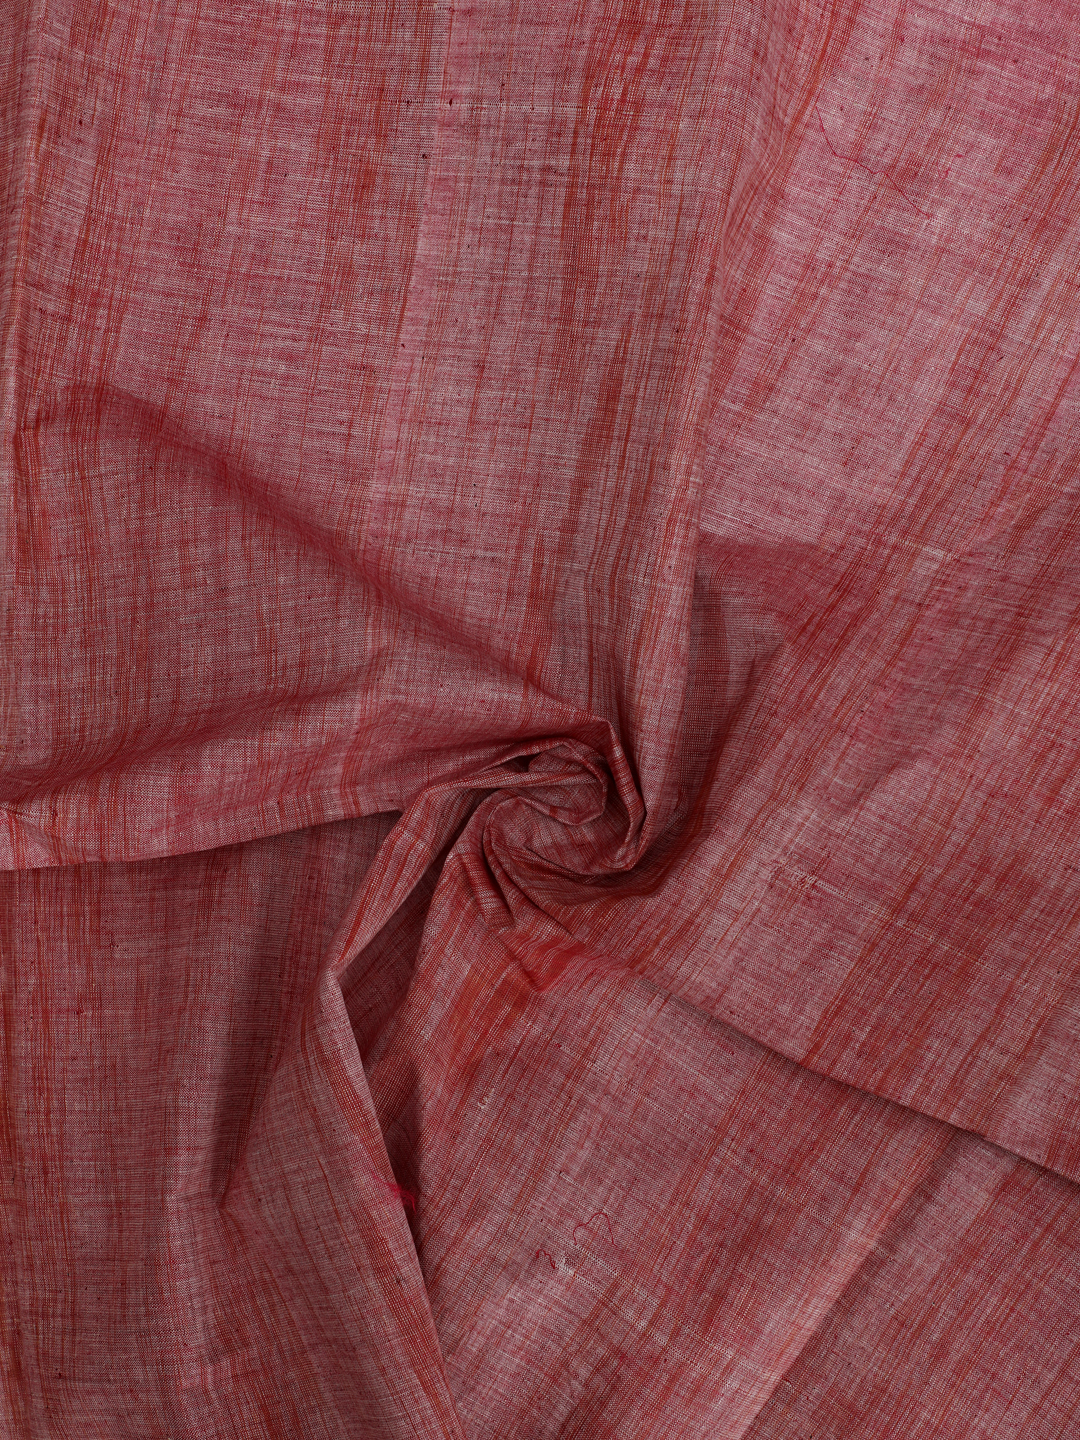 Handloom Cotton Khadi Fabric, Multicolour at Rs 68/meter in New Delhi